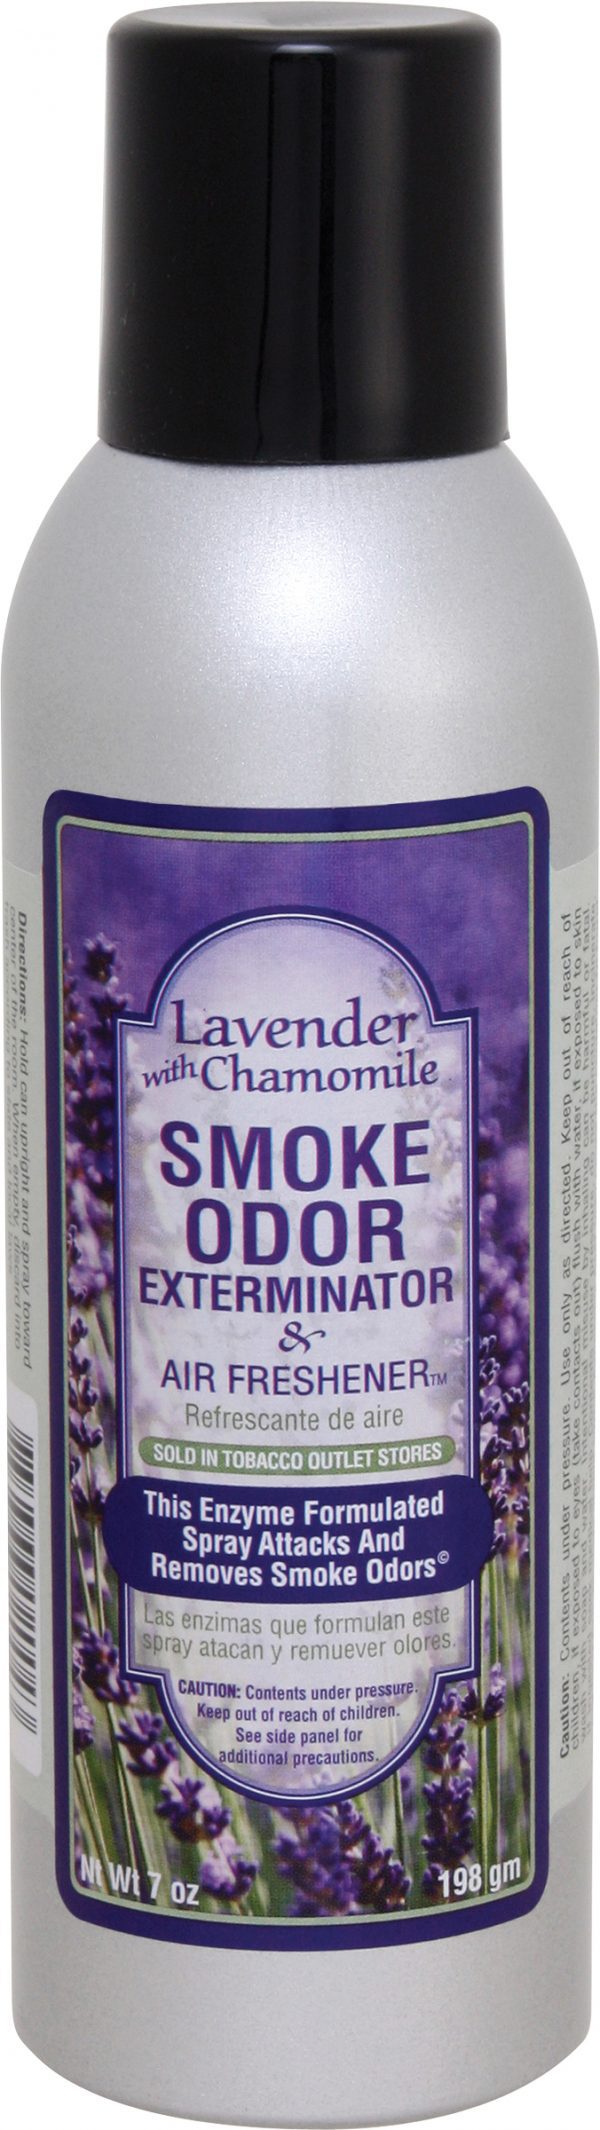 smoke odor exterminator spray bottle lavender and chamomile